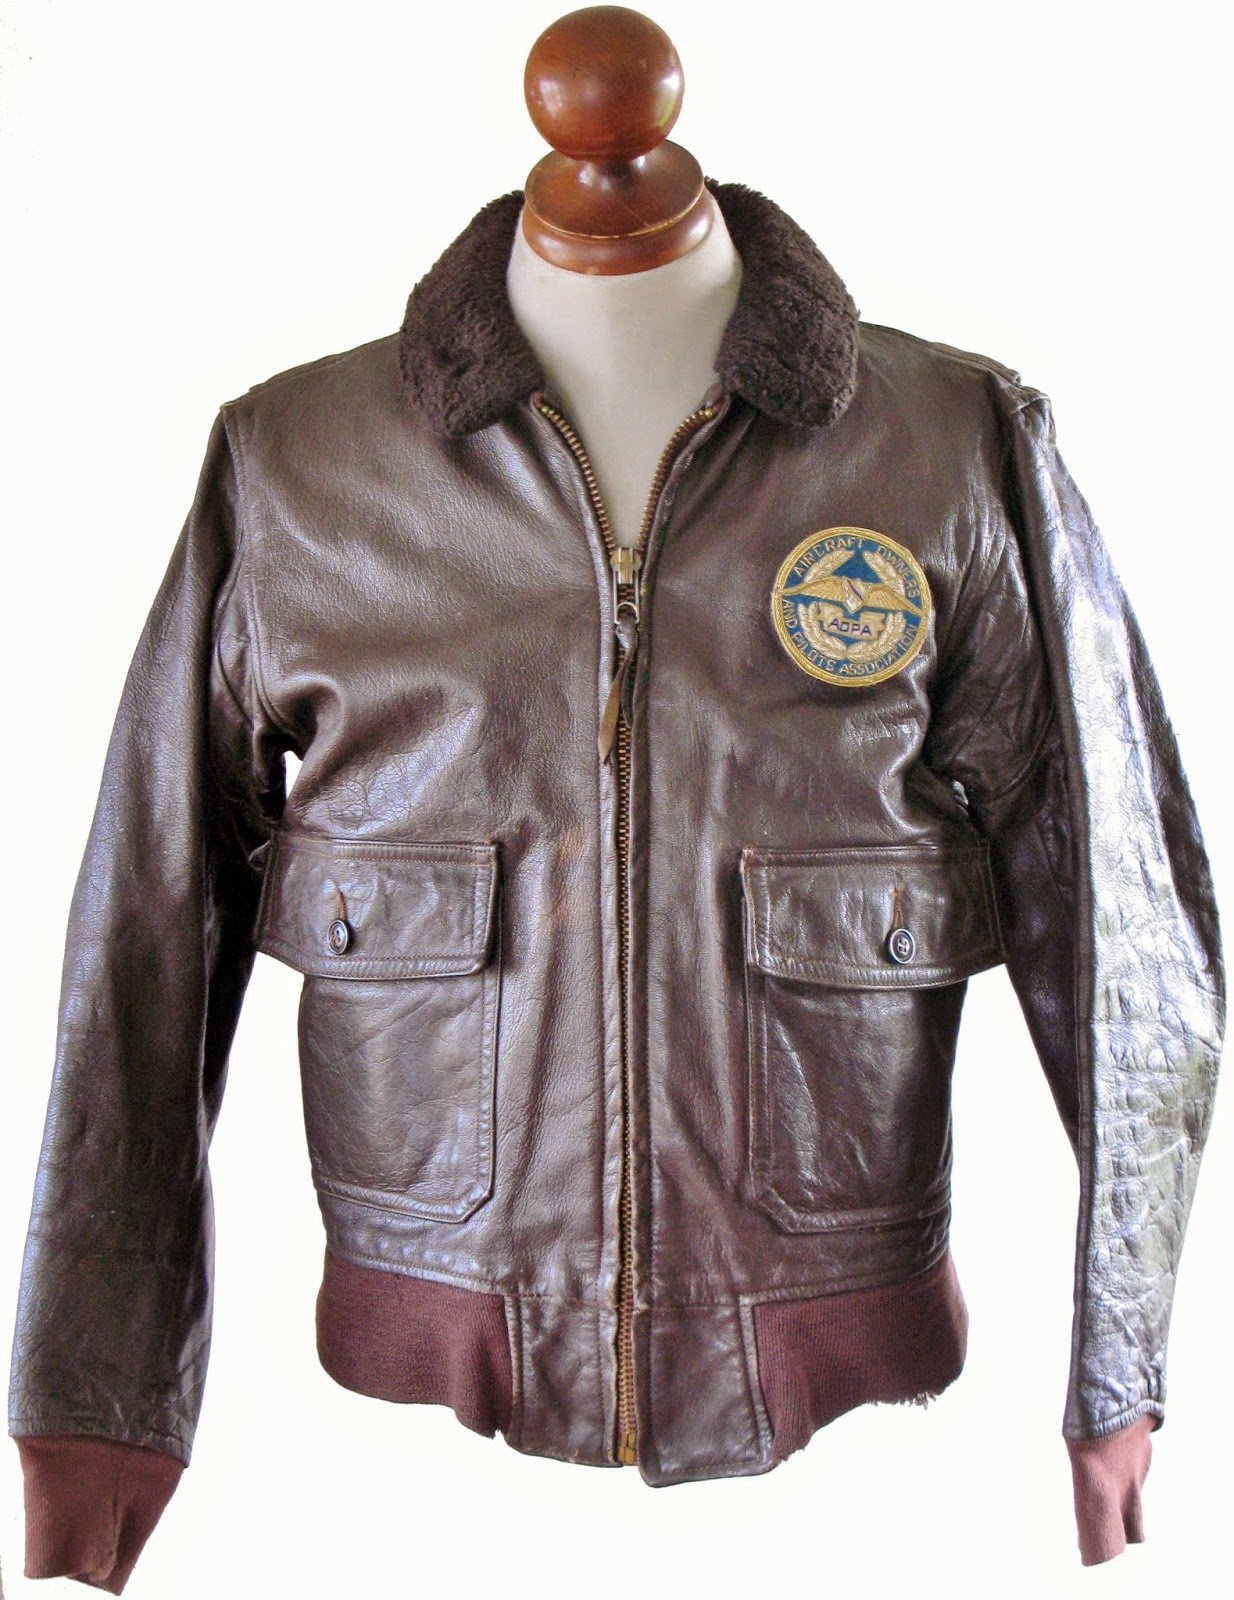 AOPA patched G-1 flight jacket